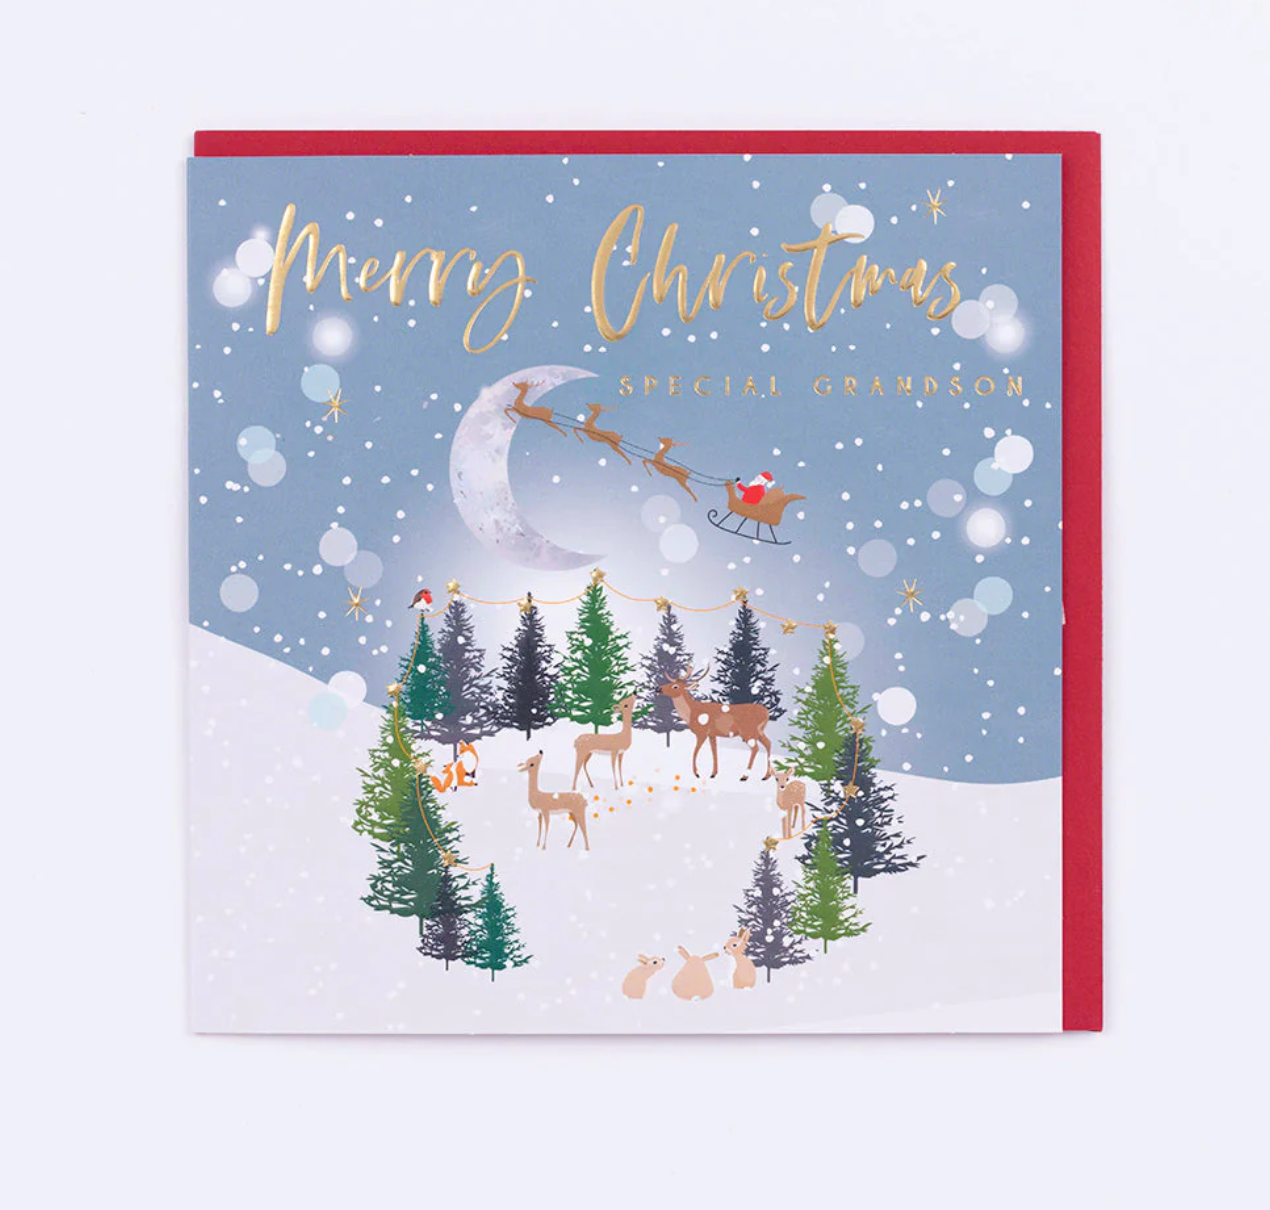 Belly Button Special Grandson Winter Wonderland Christmas Card